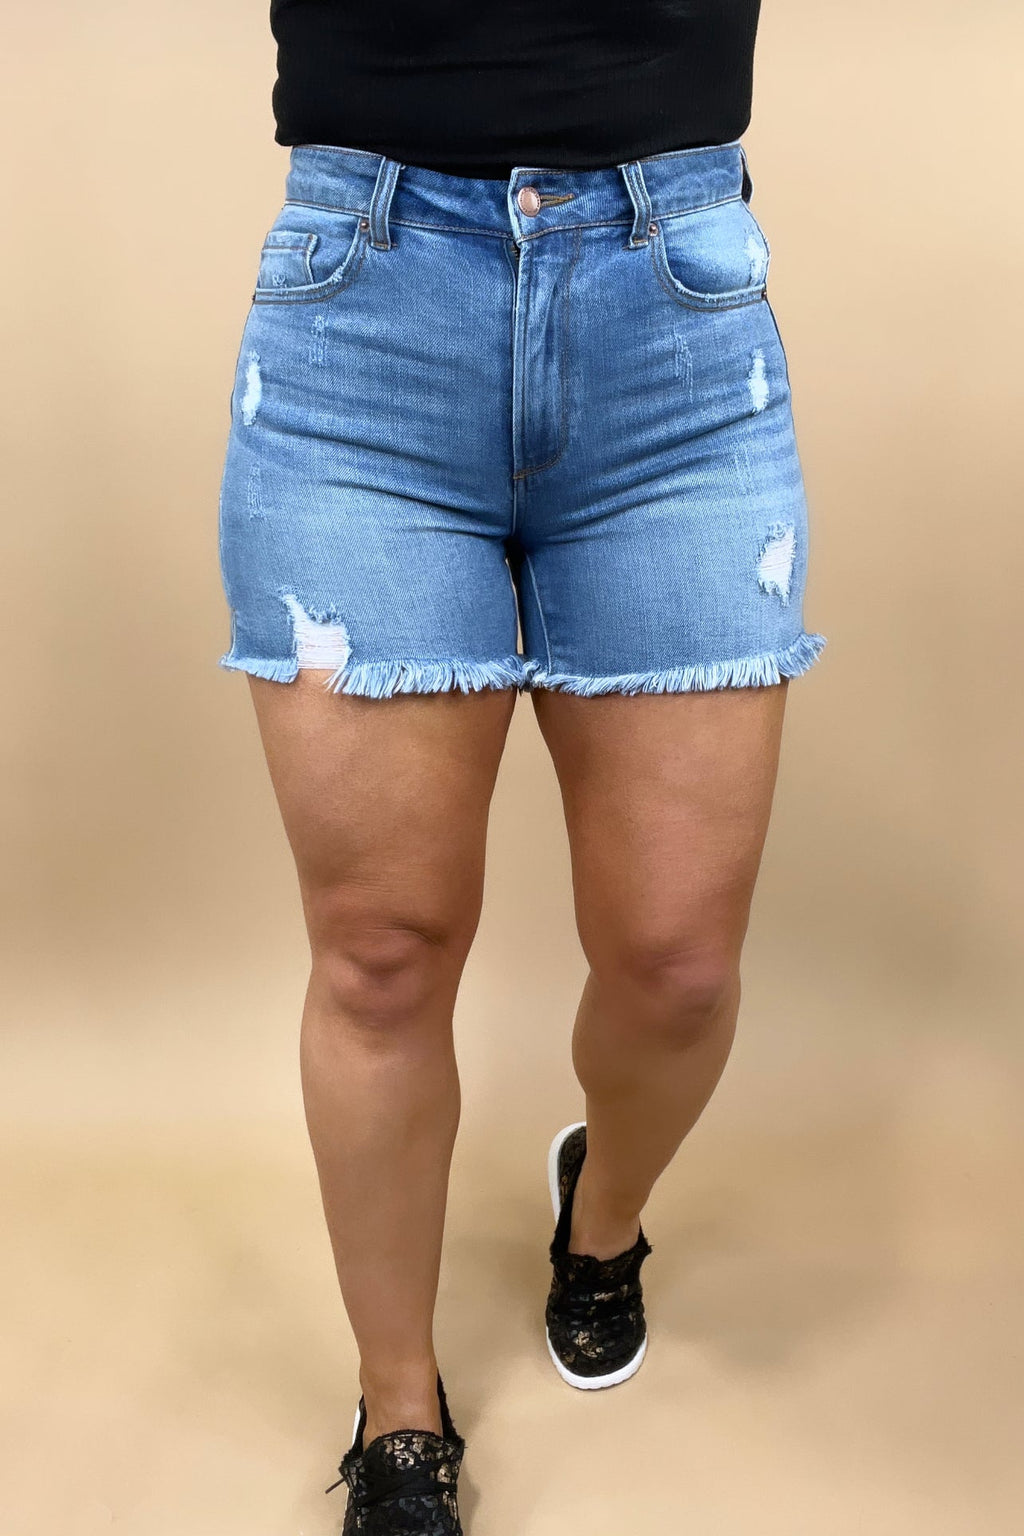 The Savannah's- Medium Wash Distressed Jean Shorts w/ Side Slits